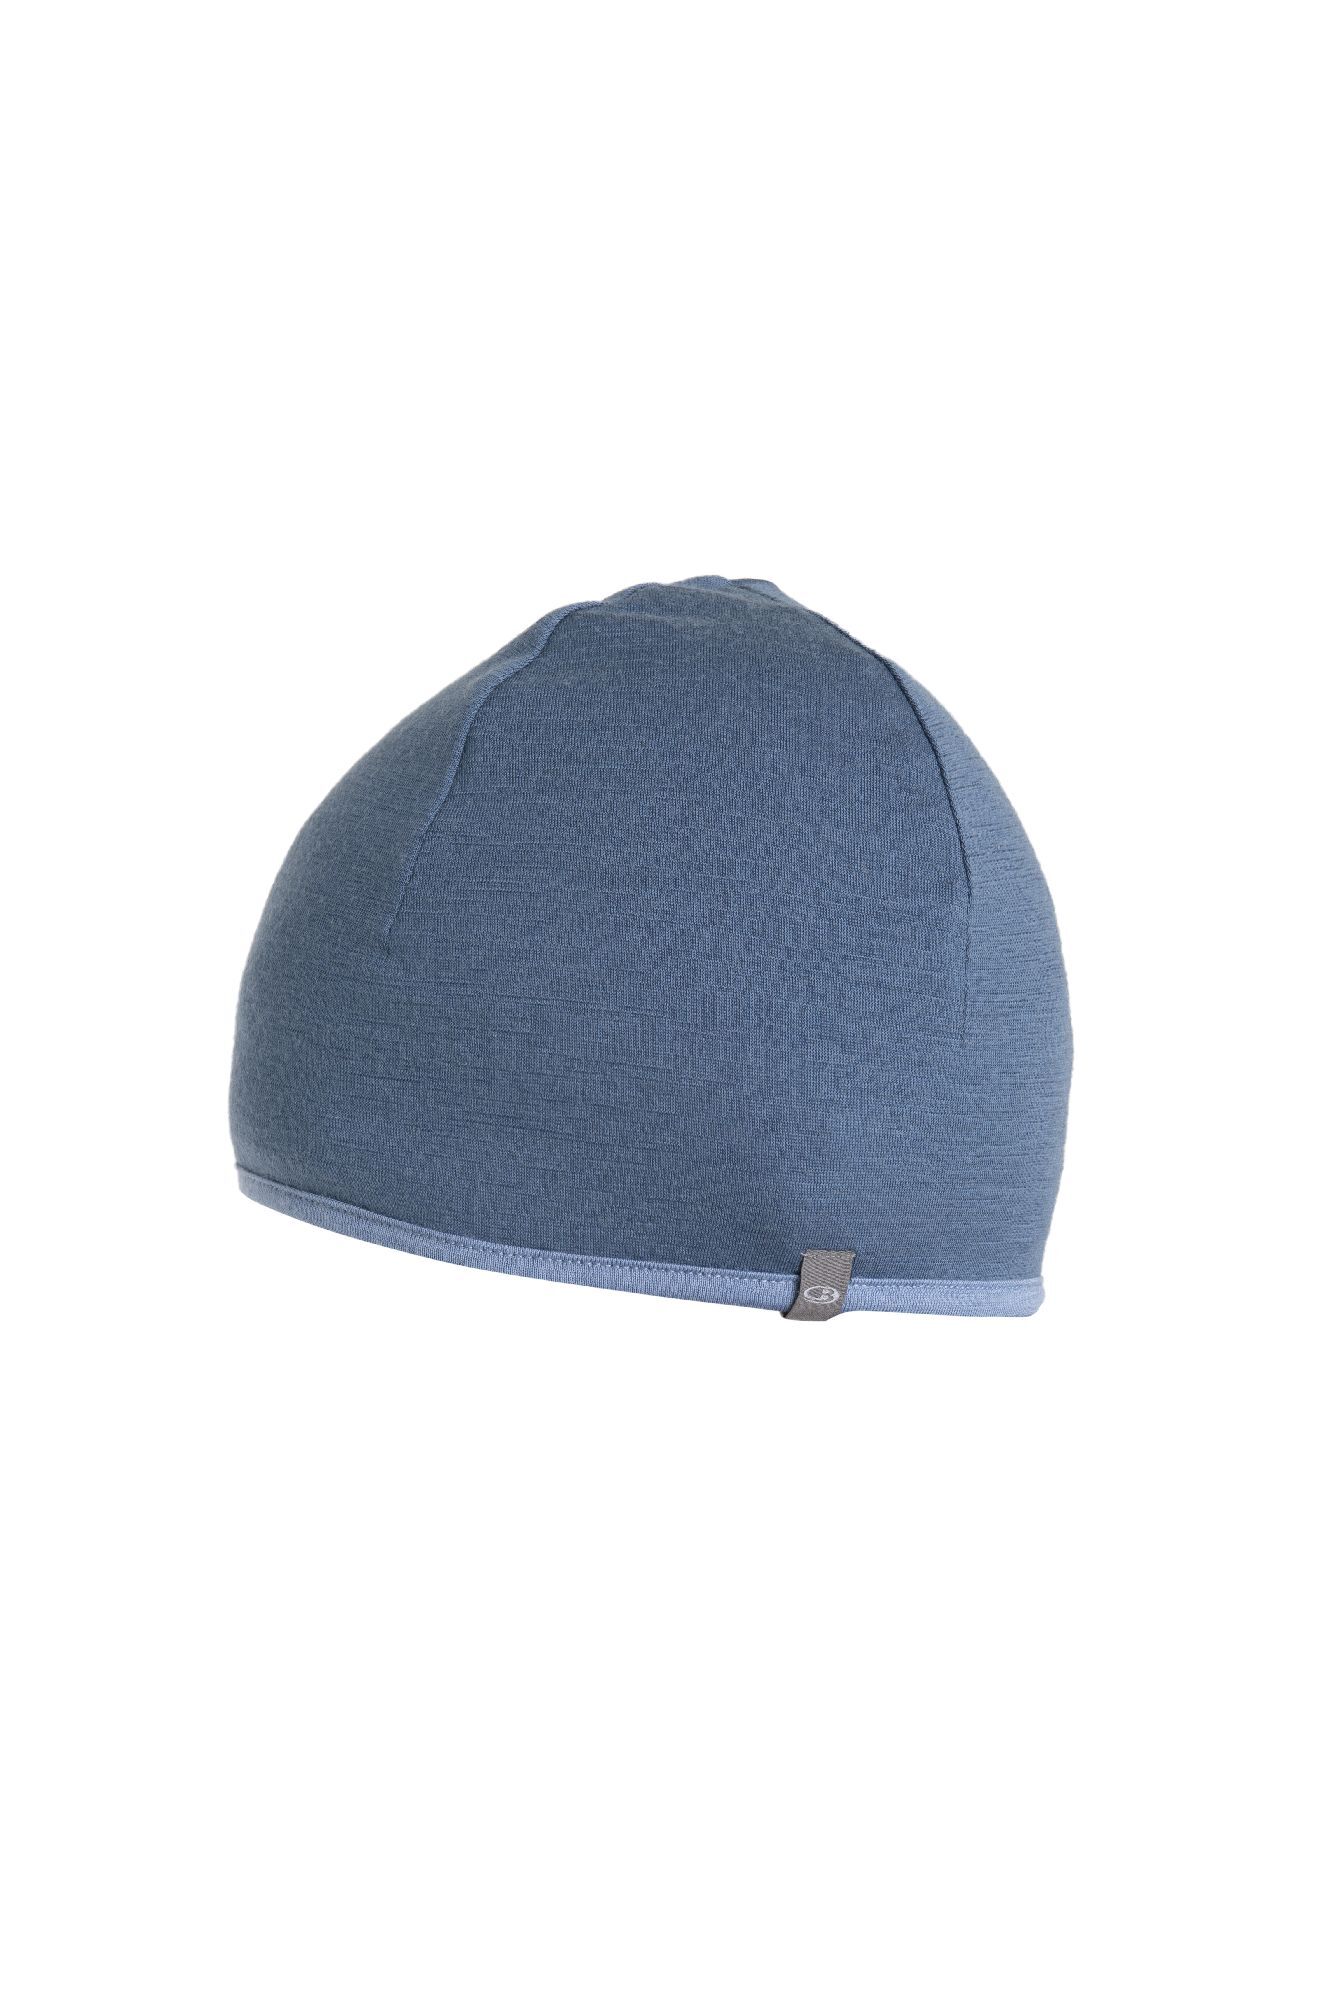 Icebreaker Pocket Hat - Bonnet laine mérinos | Hardloop